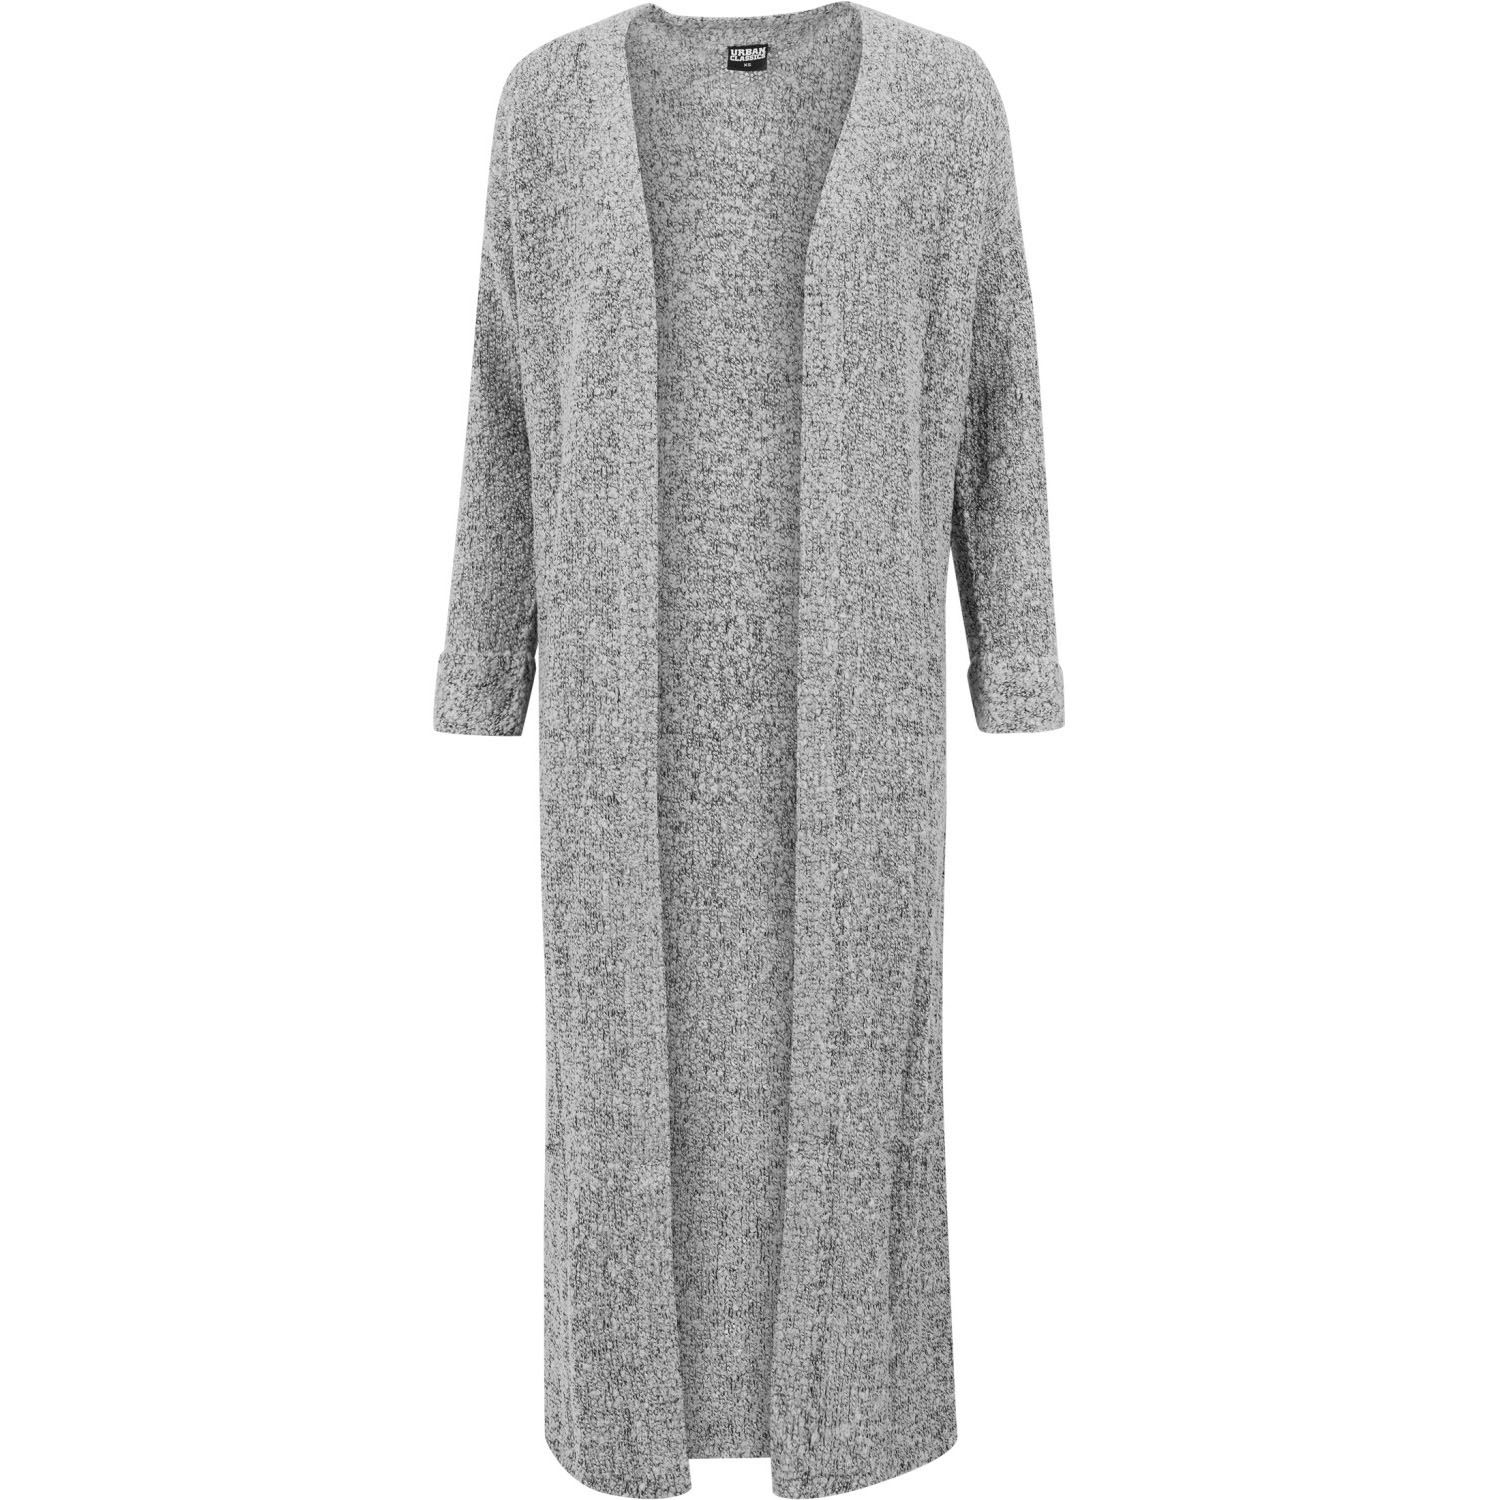 Buy Urban Classics Ladies - BOUCLE Long Cardigan grey